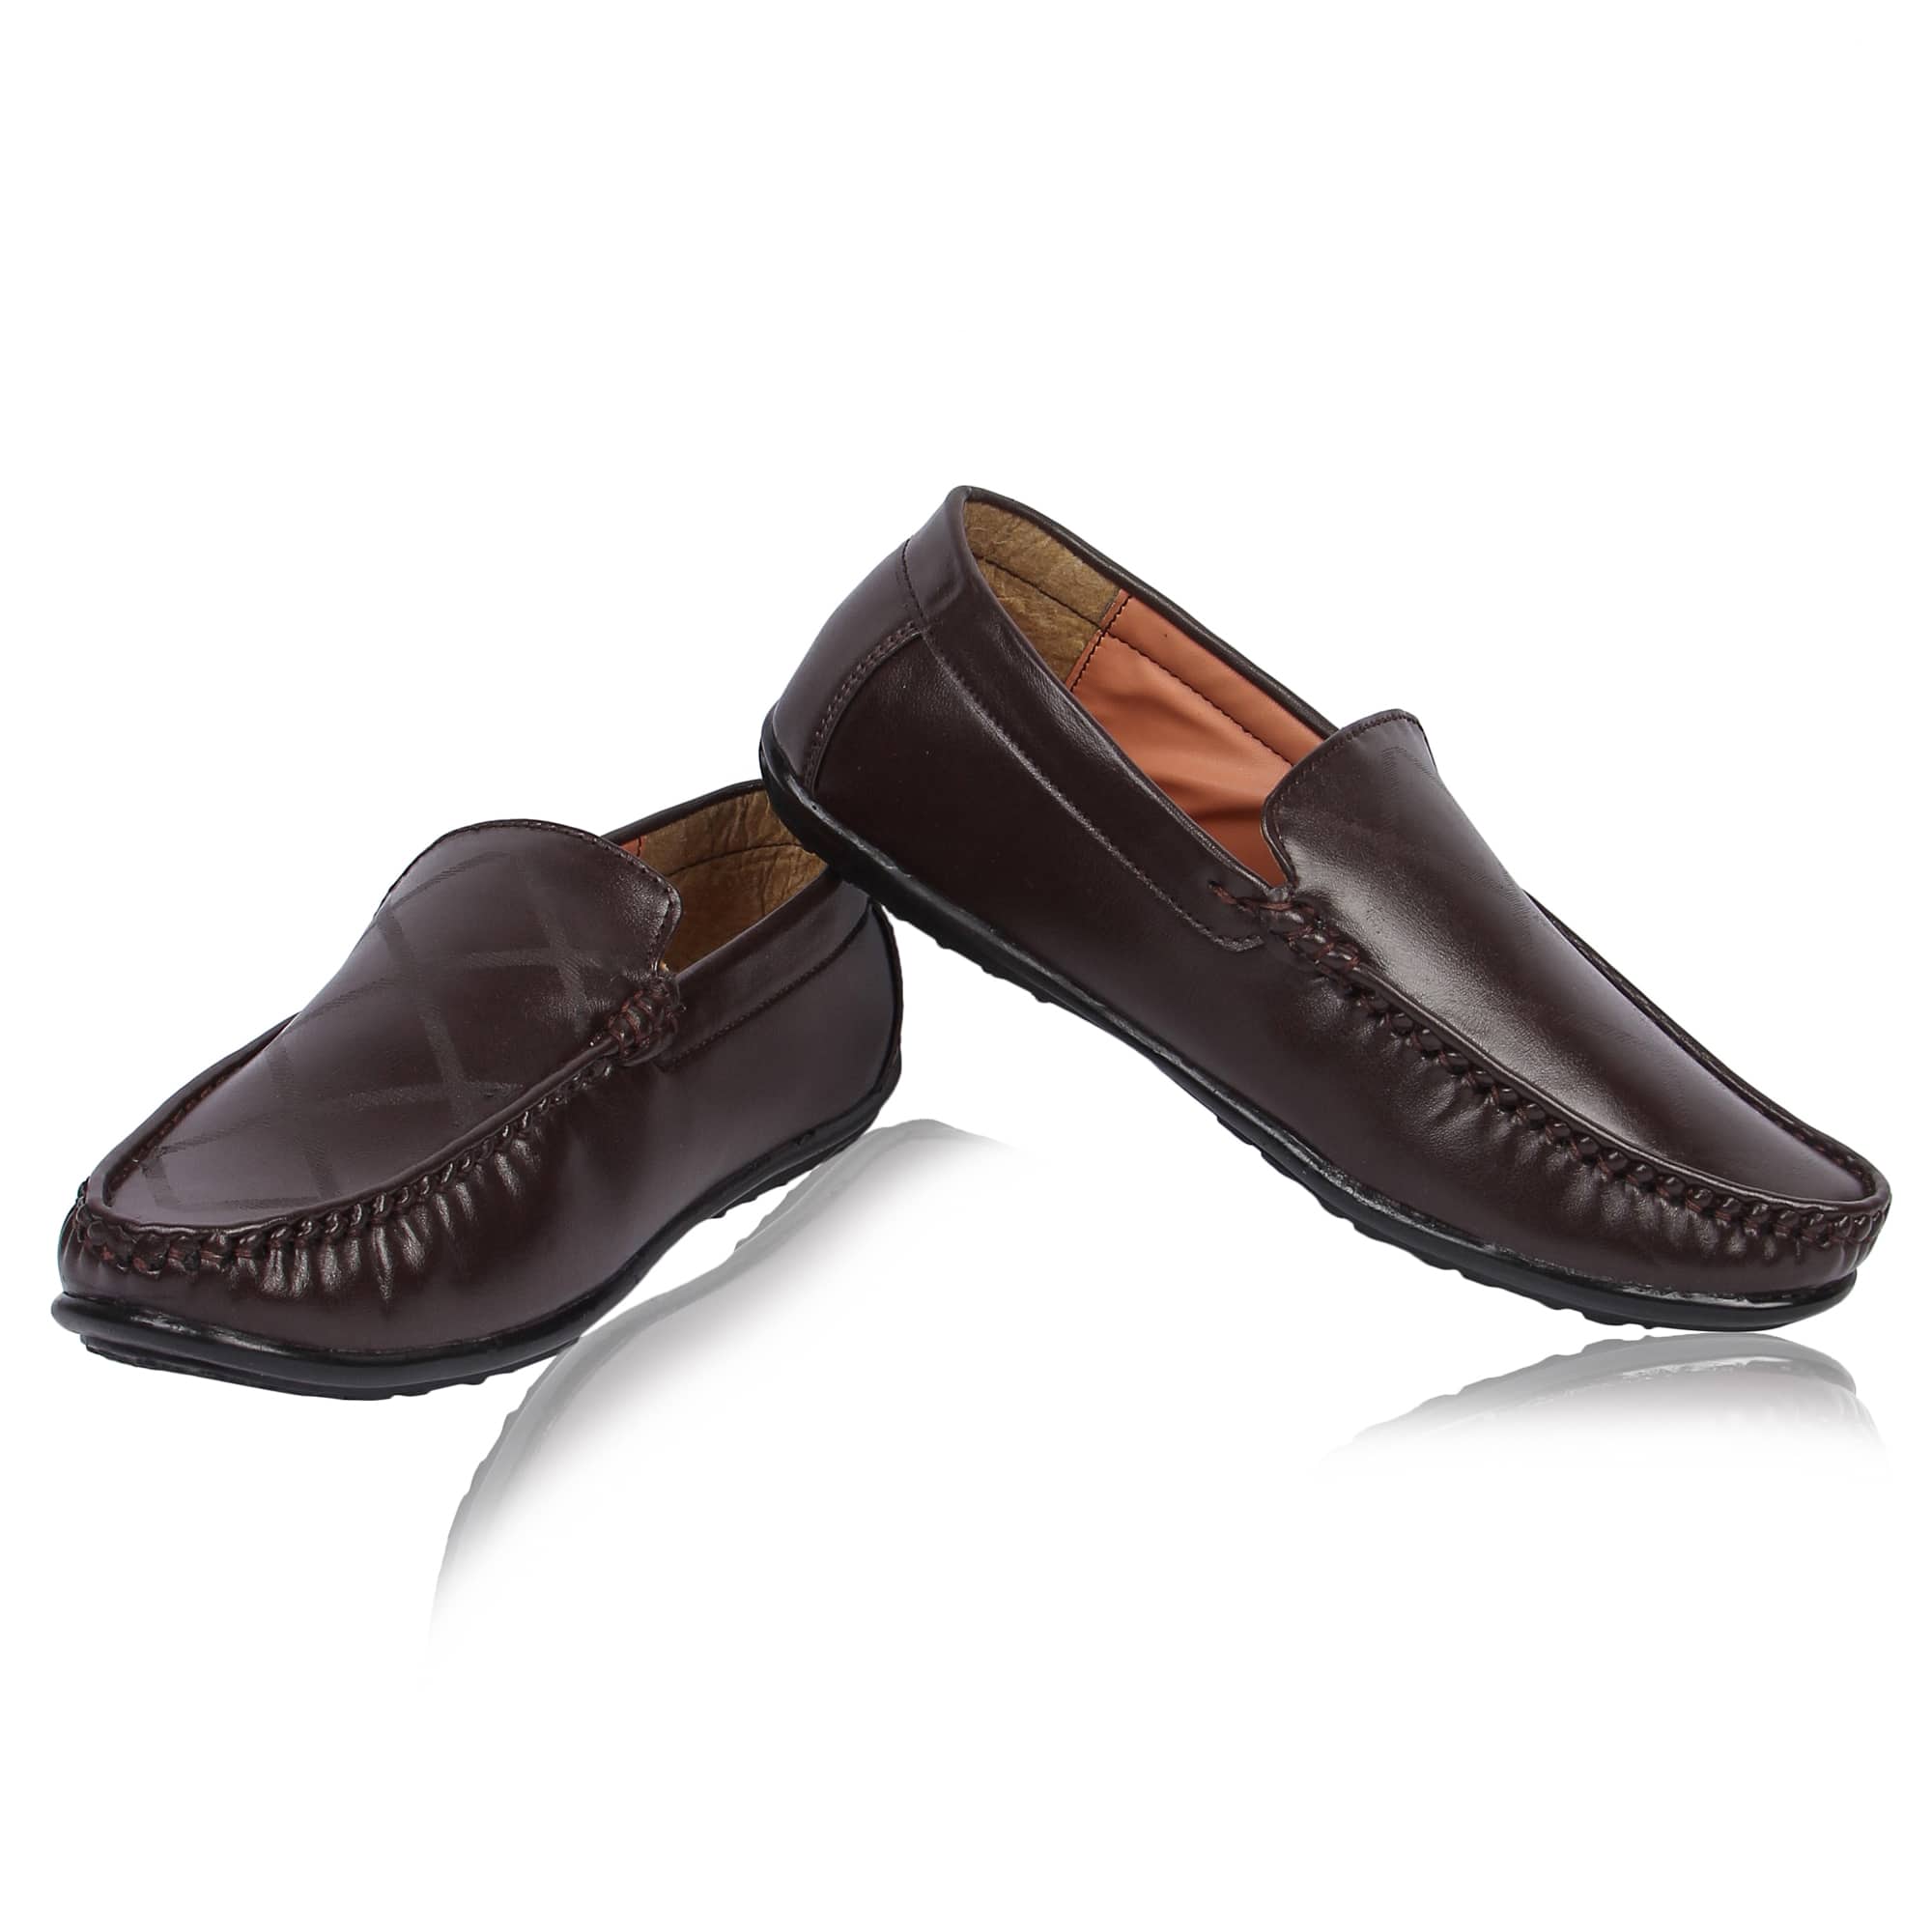 IMG_0157-min | Online Store for Men Footwear in India